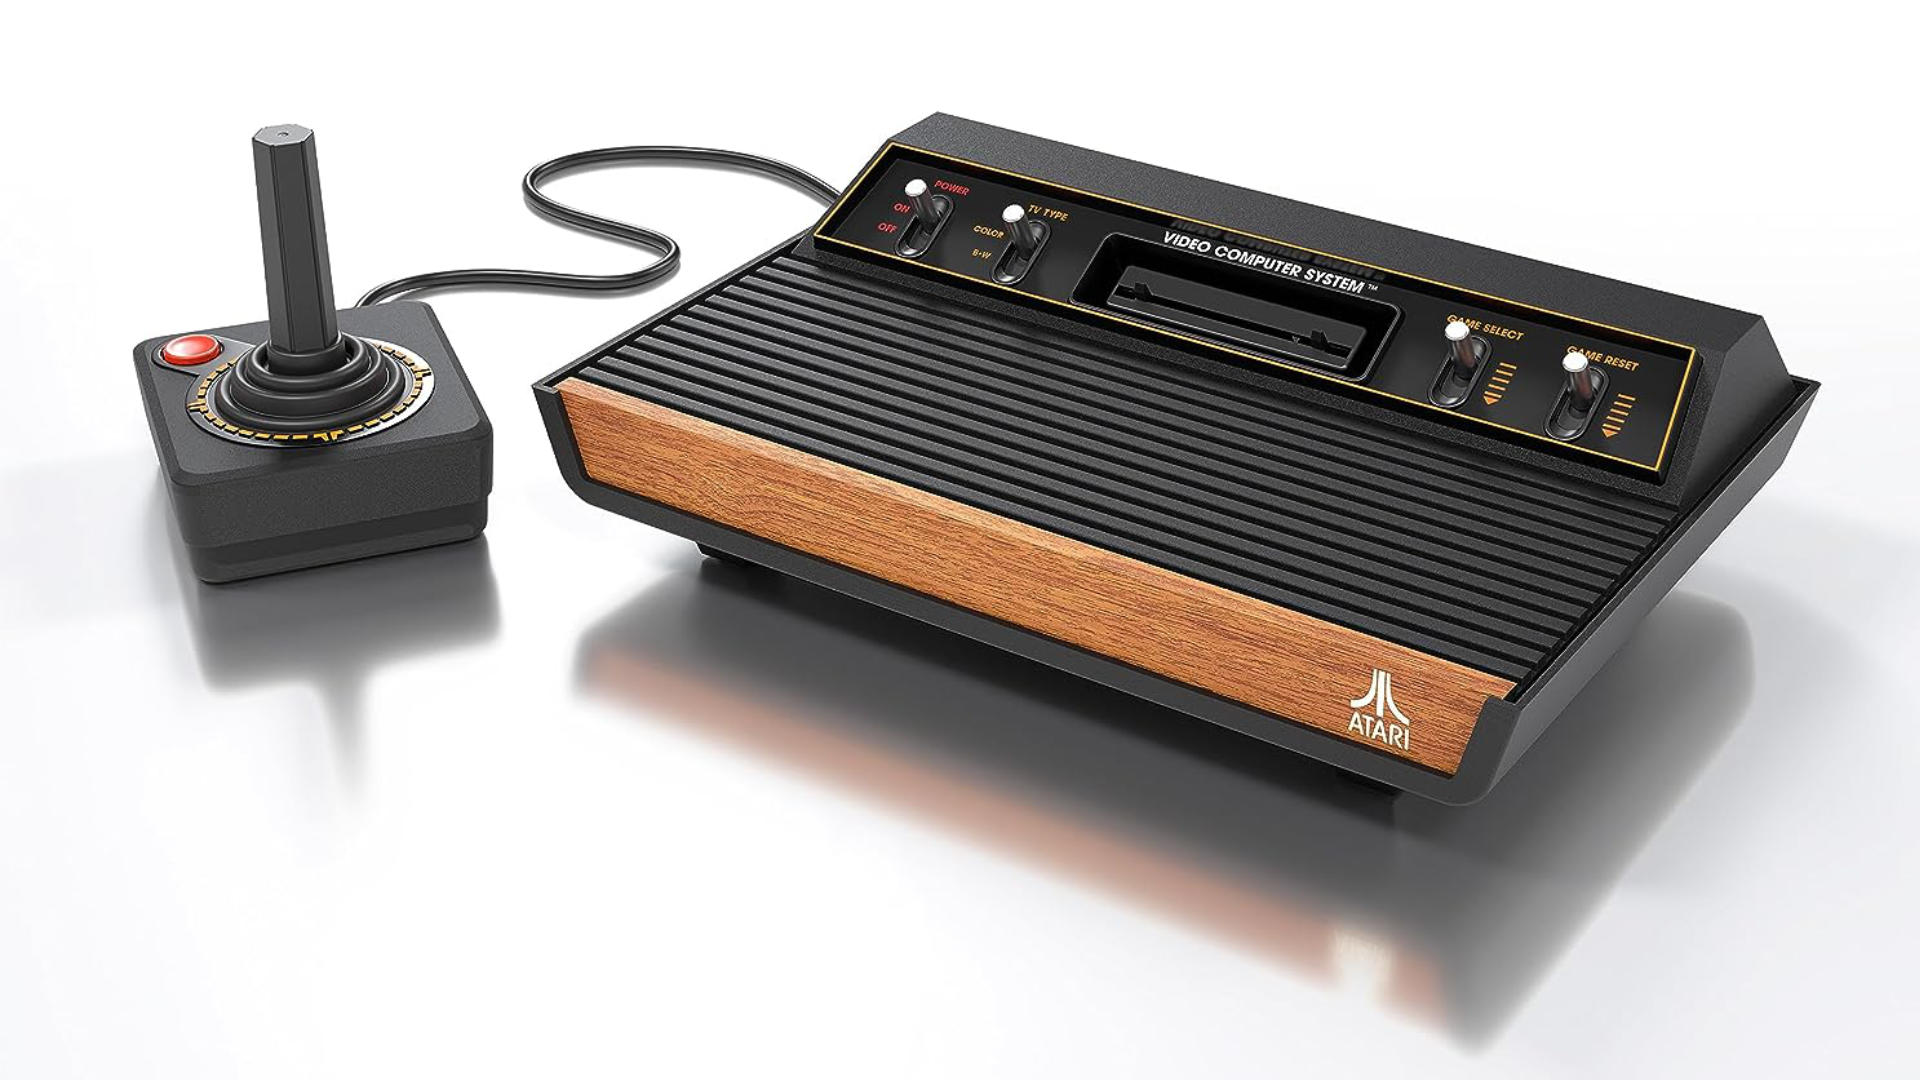 Atari: Retro-Konsole 2600+ ab sofort vorbestellbar!